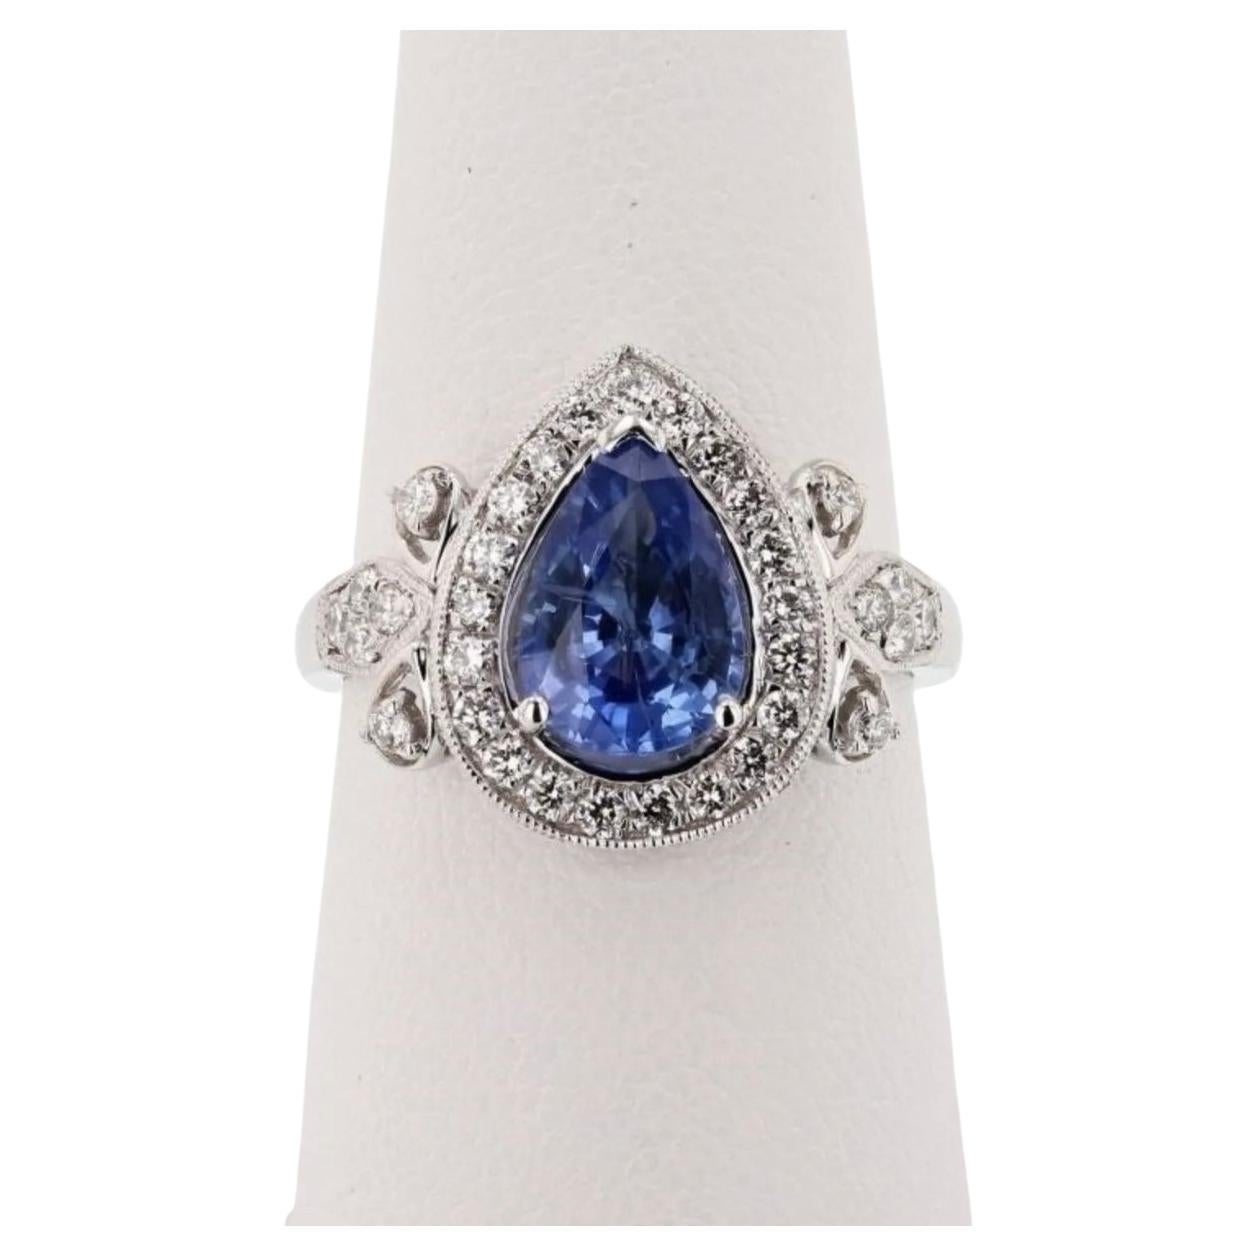 Authentic Platinum 2.02 Ct Sapphire & Diamond Ring Appraisal Inc For Sale